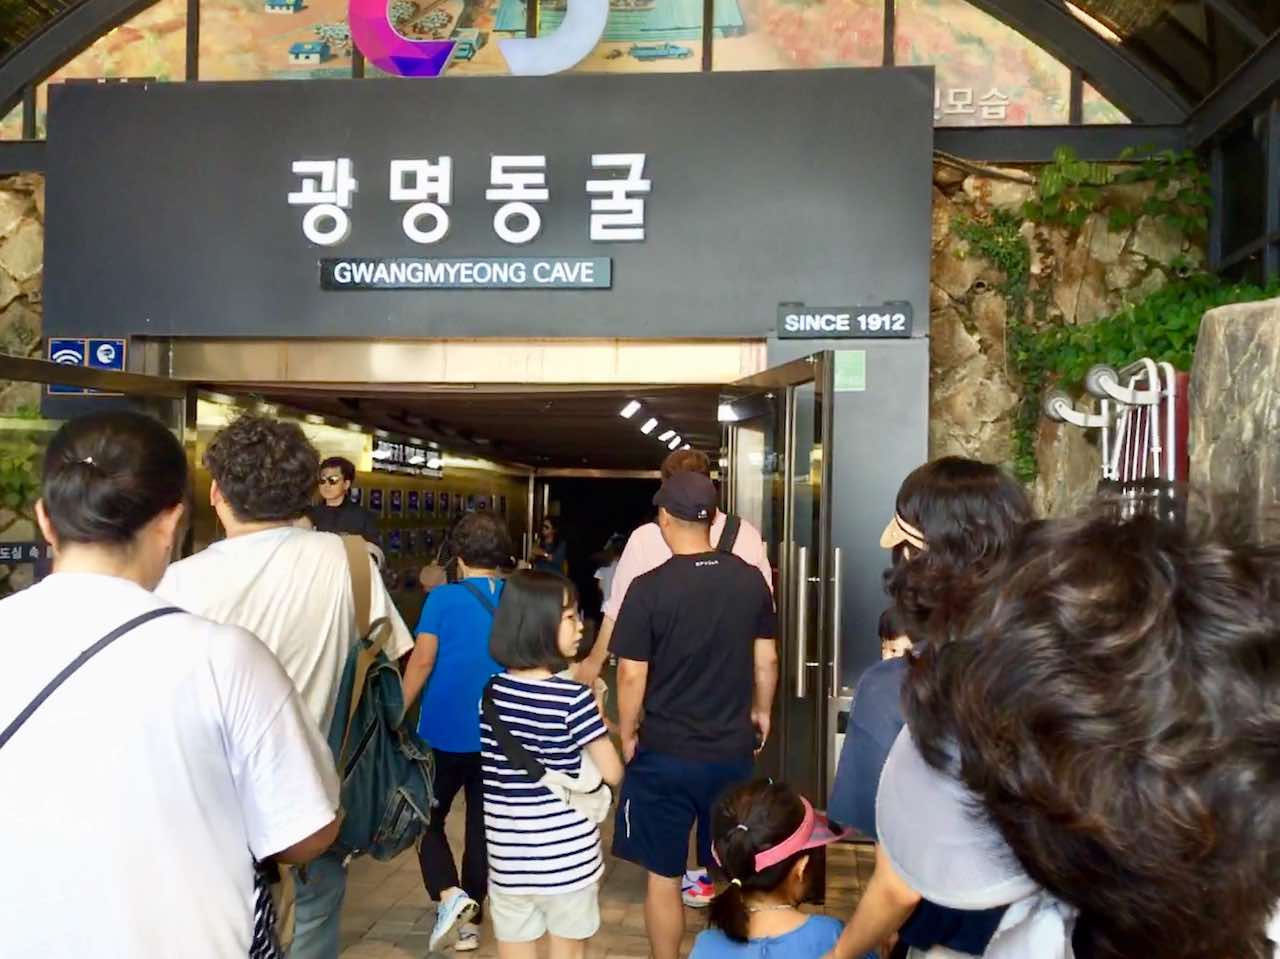 /lifelog/assets/2020-07-29-trip-gwangmyeong-cave-00.jpg